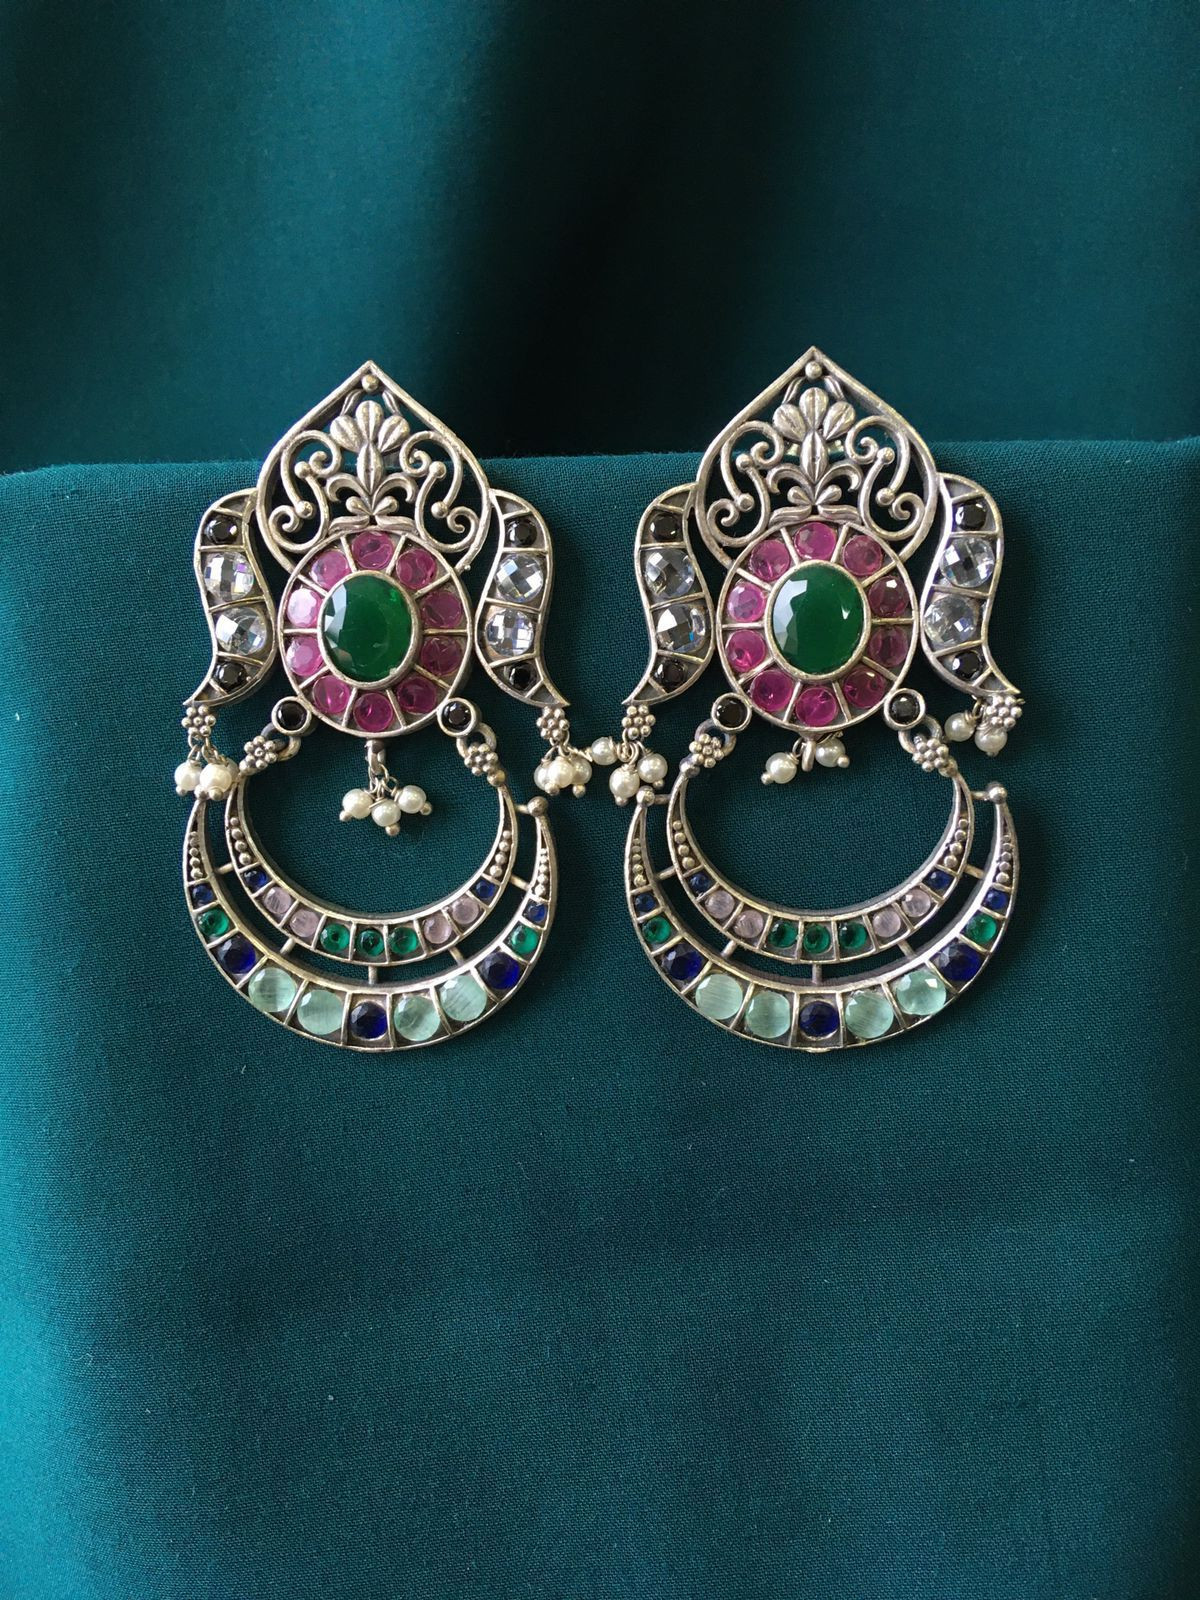 Stone Based Oxidized Earrings in Green & Pink